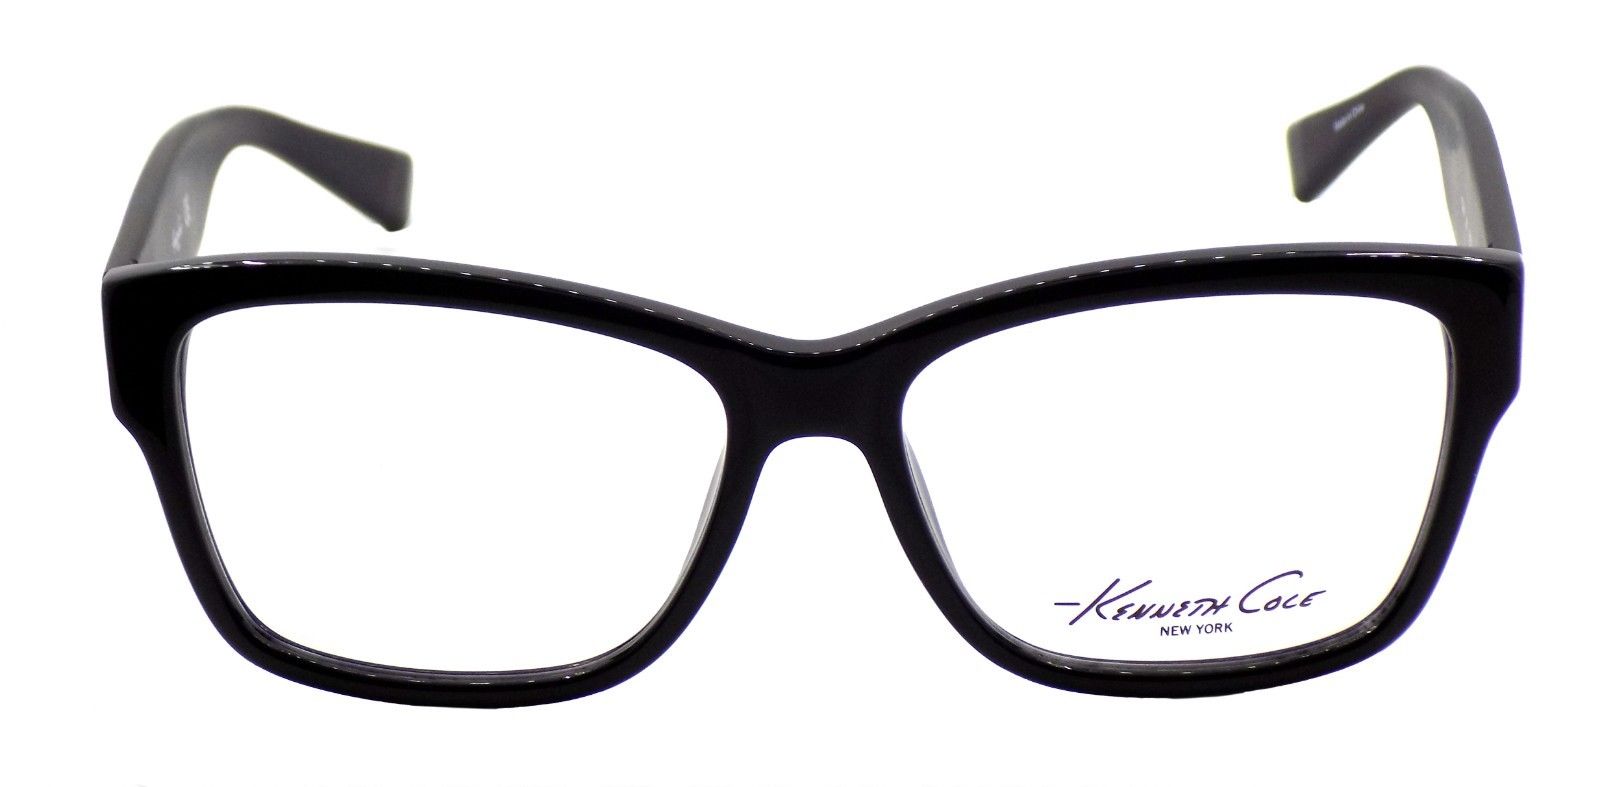 2-Kenneth Cole NY KC0247 001 Women's Eyeglasses 53-15-140 Shiny Black + CASE-664689822577-IKSpecs